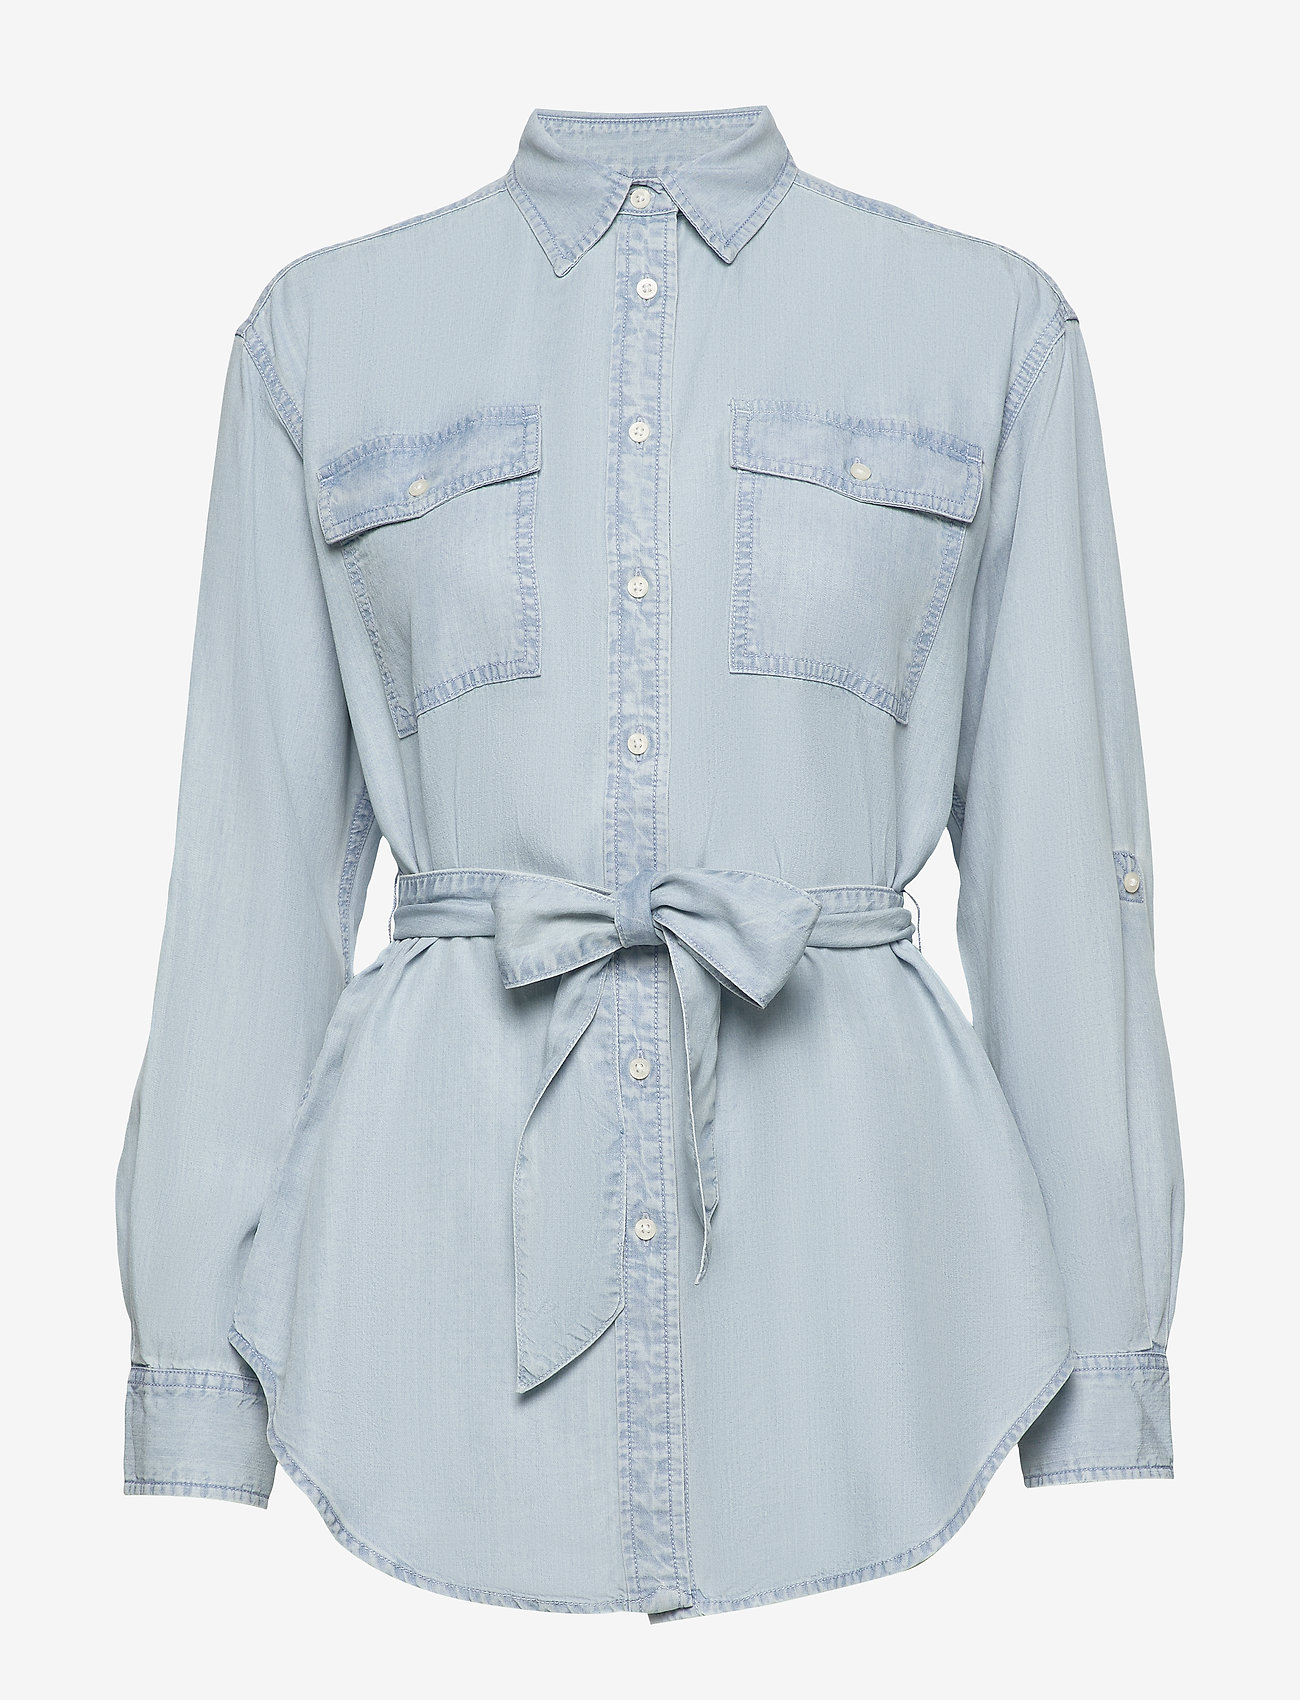 Belted Shirt (Pale Blue Wash) (159 